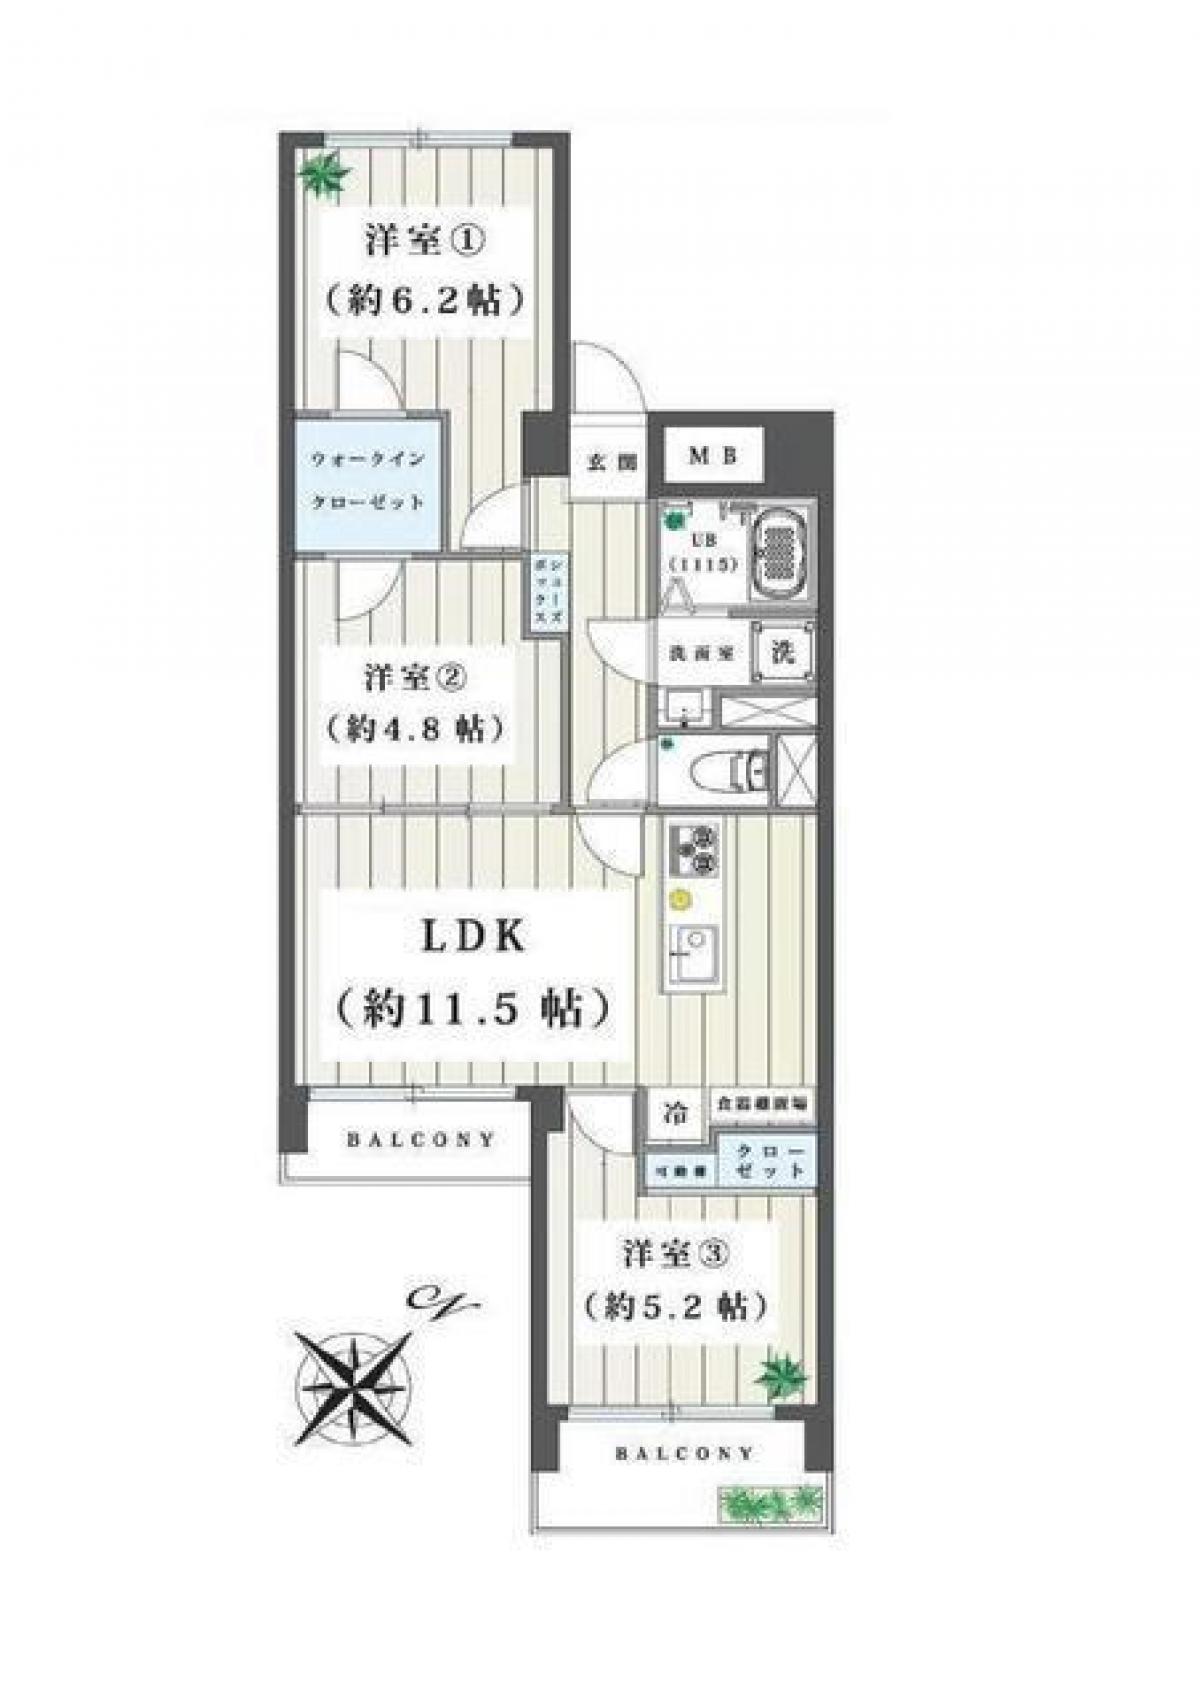 Picture of Apartment For Sale in Yokohama Shi Minami Ku, Kanagawa, Japan